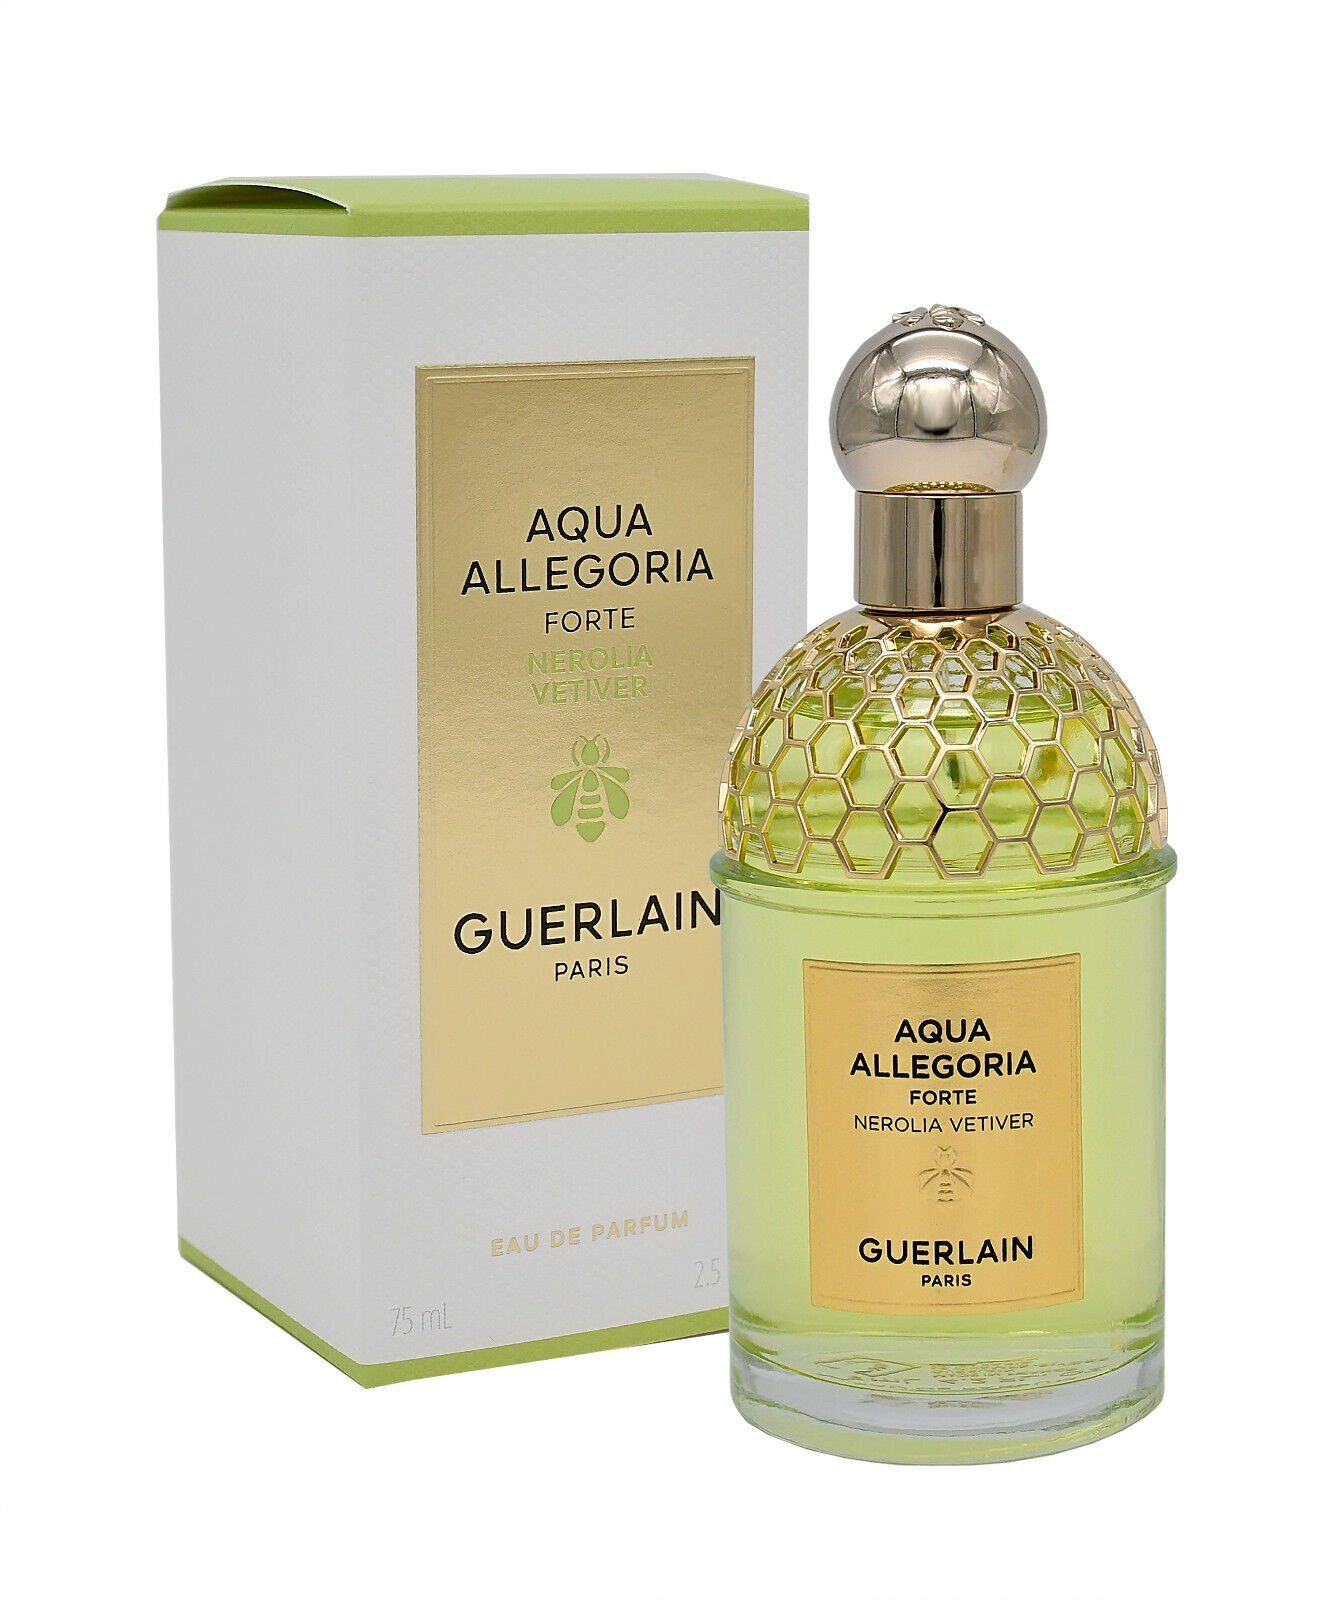 GUERLAIN Eau de Parfum GUERLAIN AQUA ALLEGORIA FORTE NEROLIA VETIVER EDP 75ML | Eau de Parfum